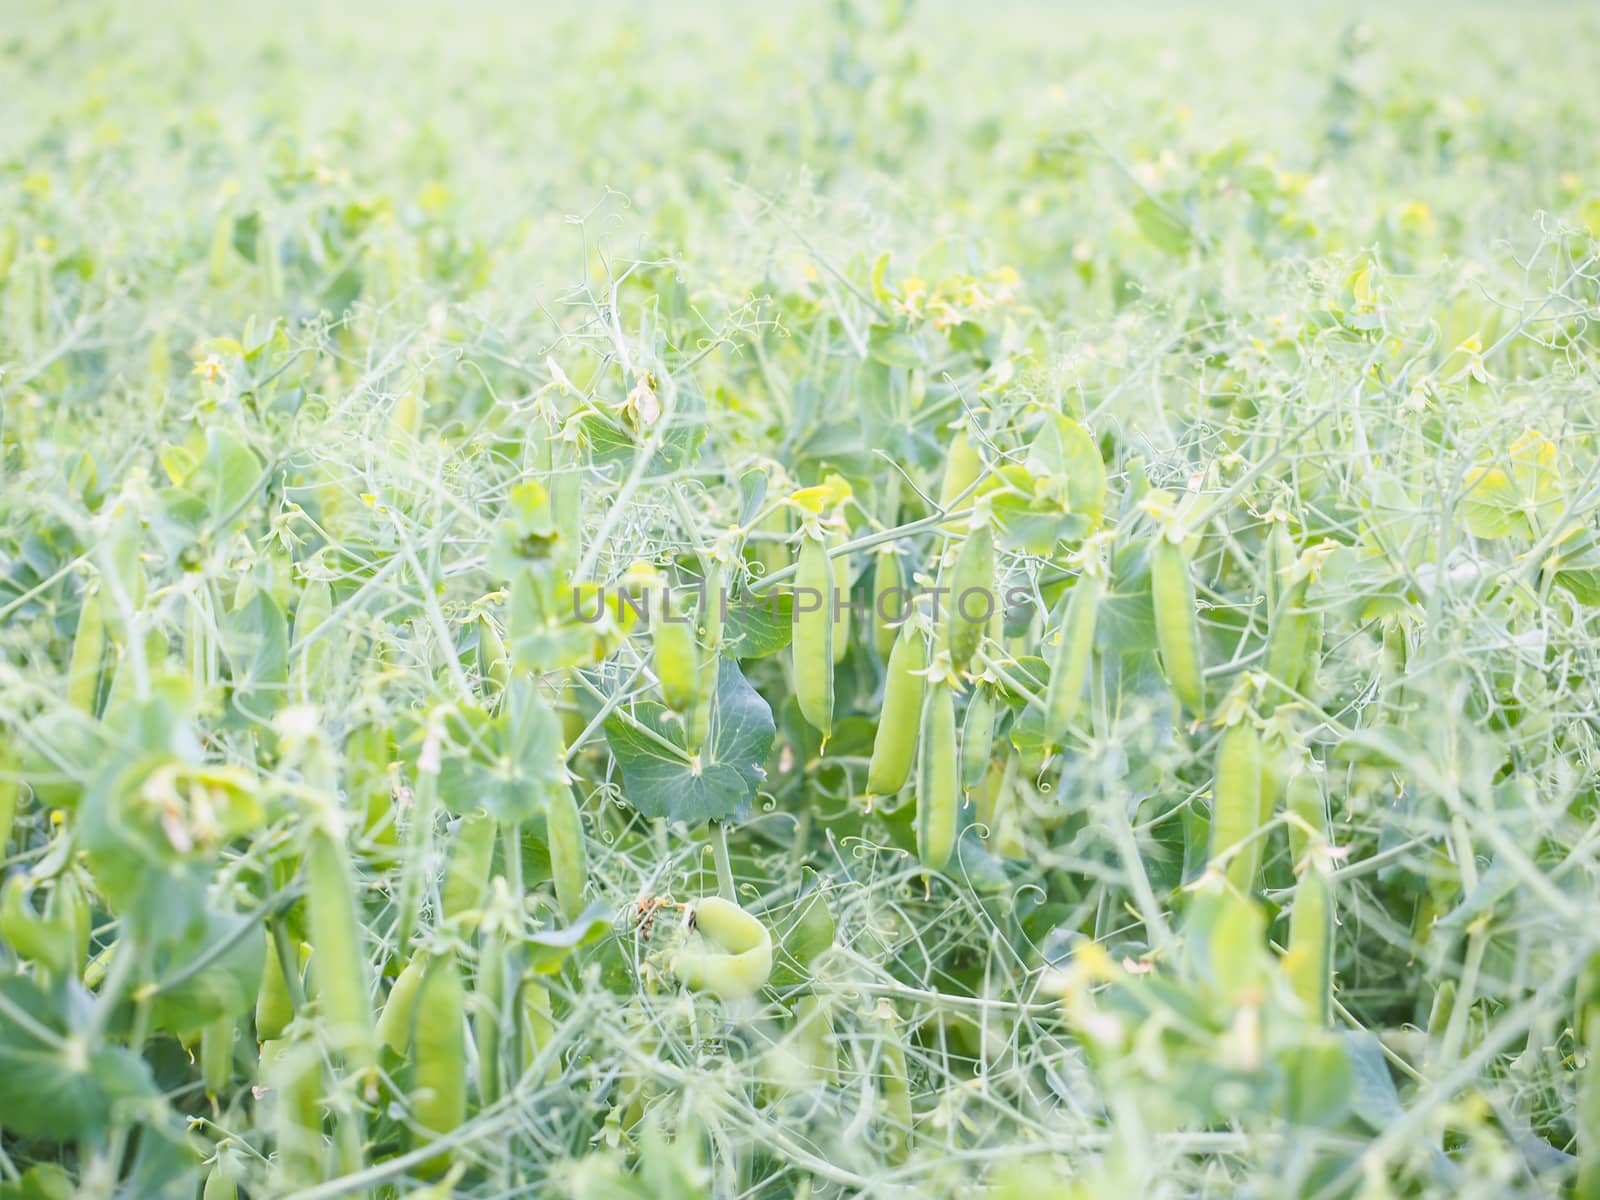 Seed pods of garden peas, pisum sativum, right before harvesting by Arvebettum